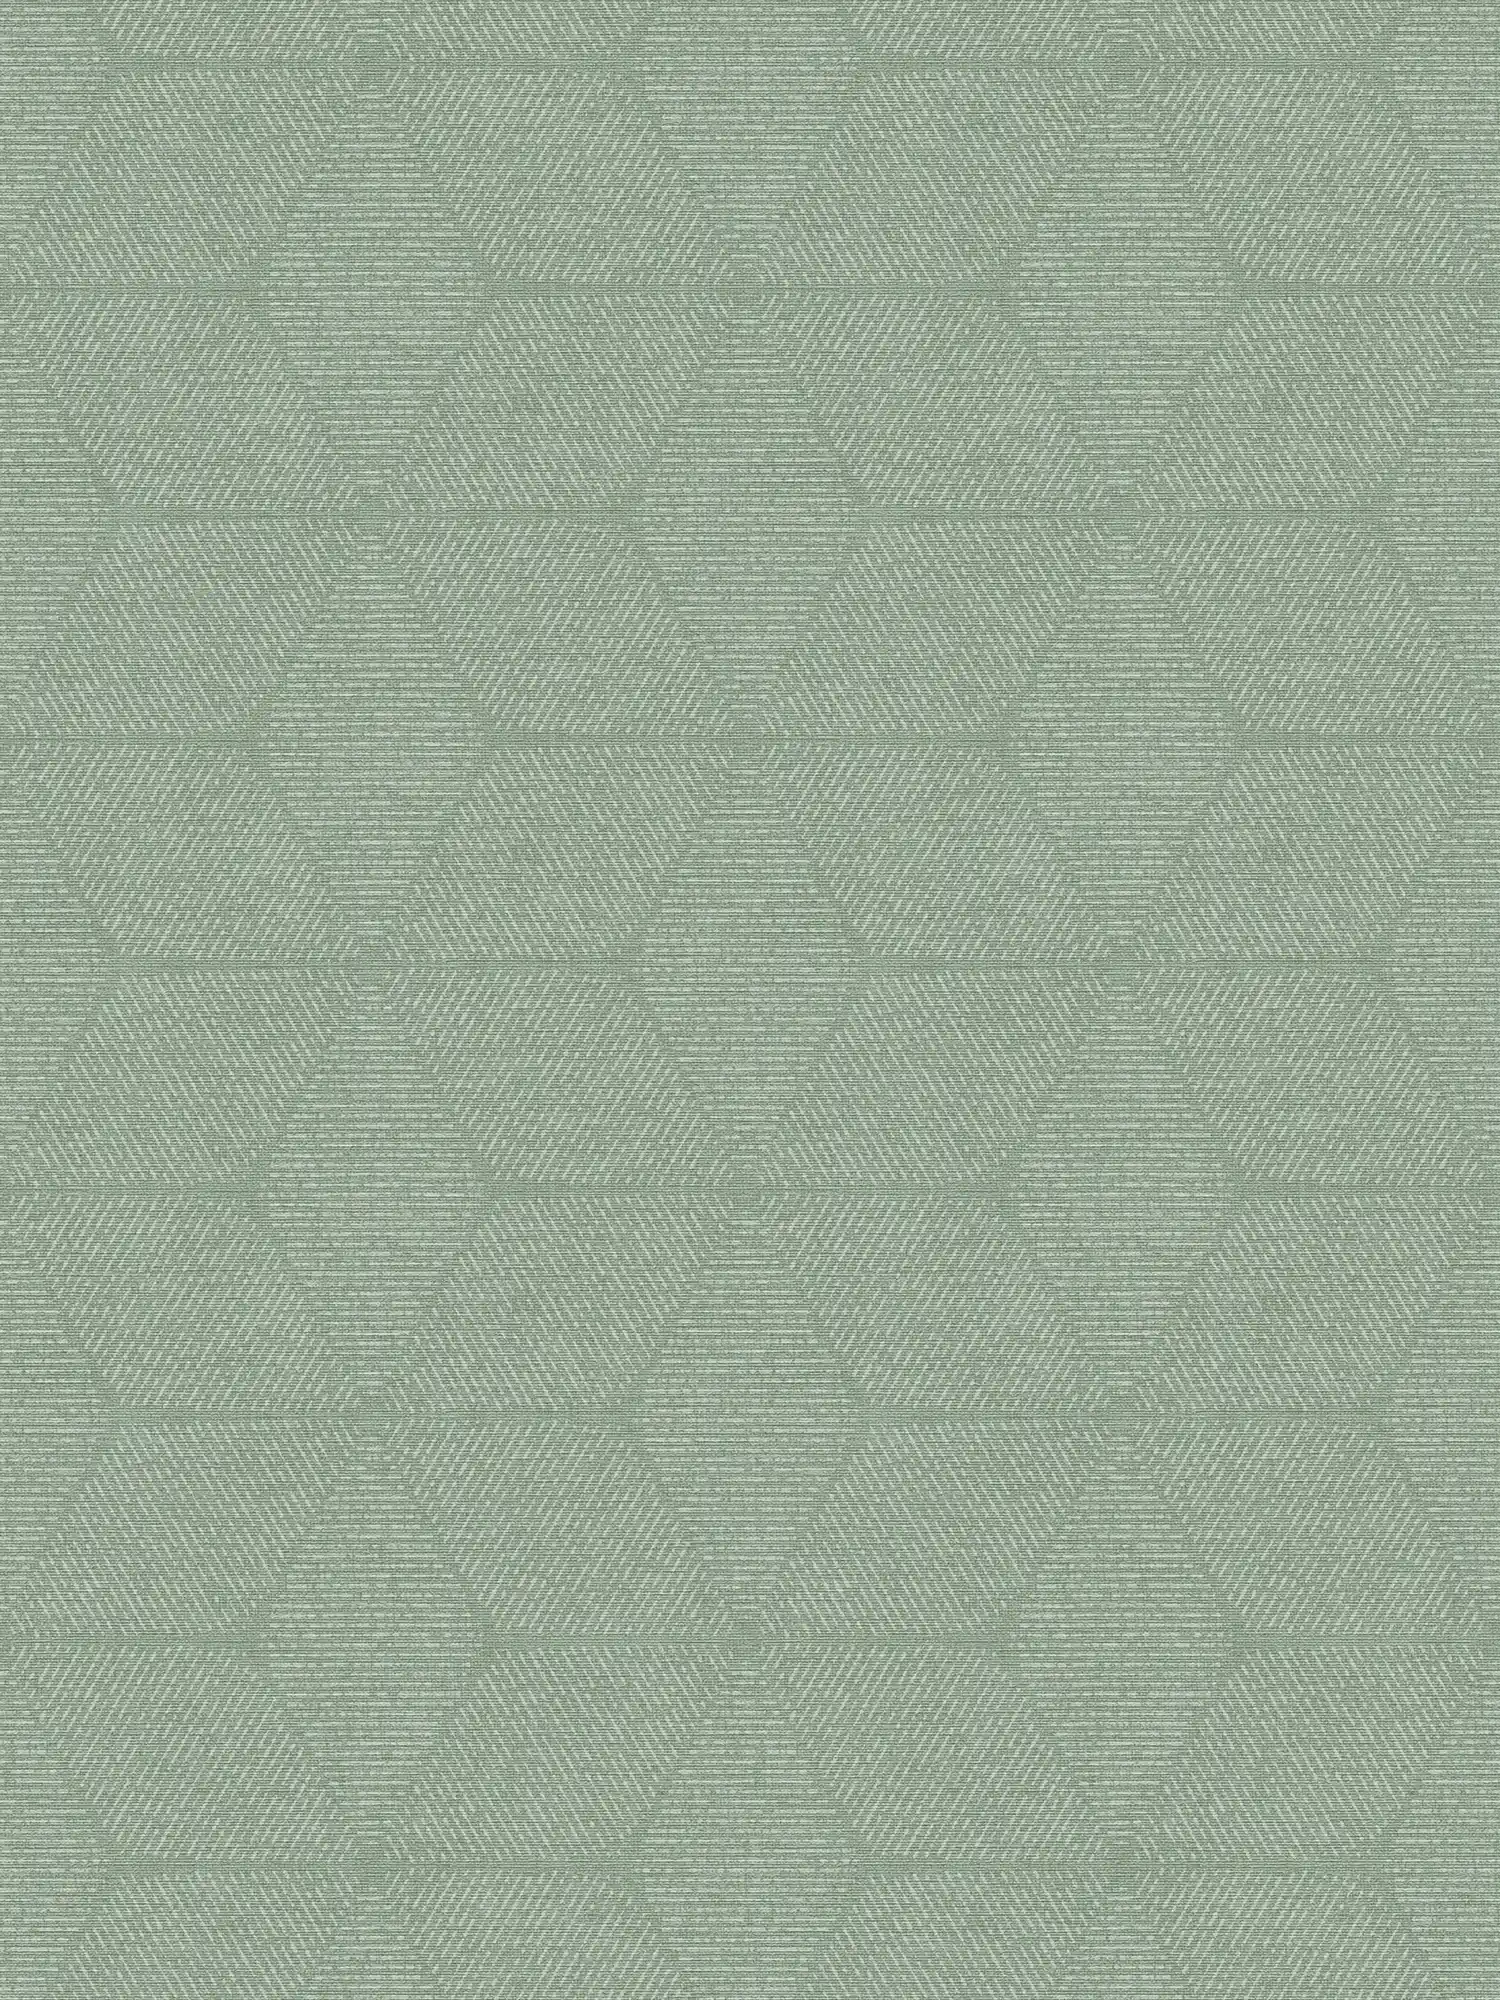 Carta da parati in tessuto non tessuto a motivi floreali - verde, bianco
